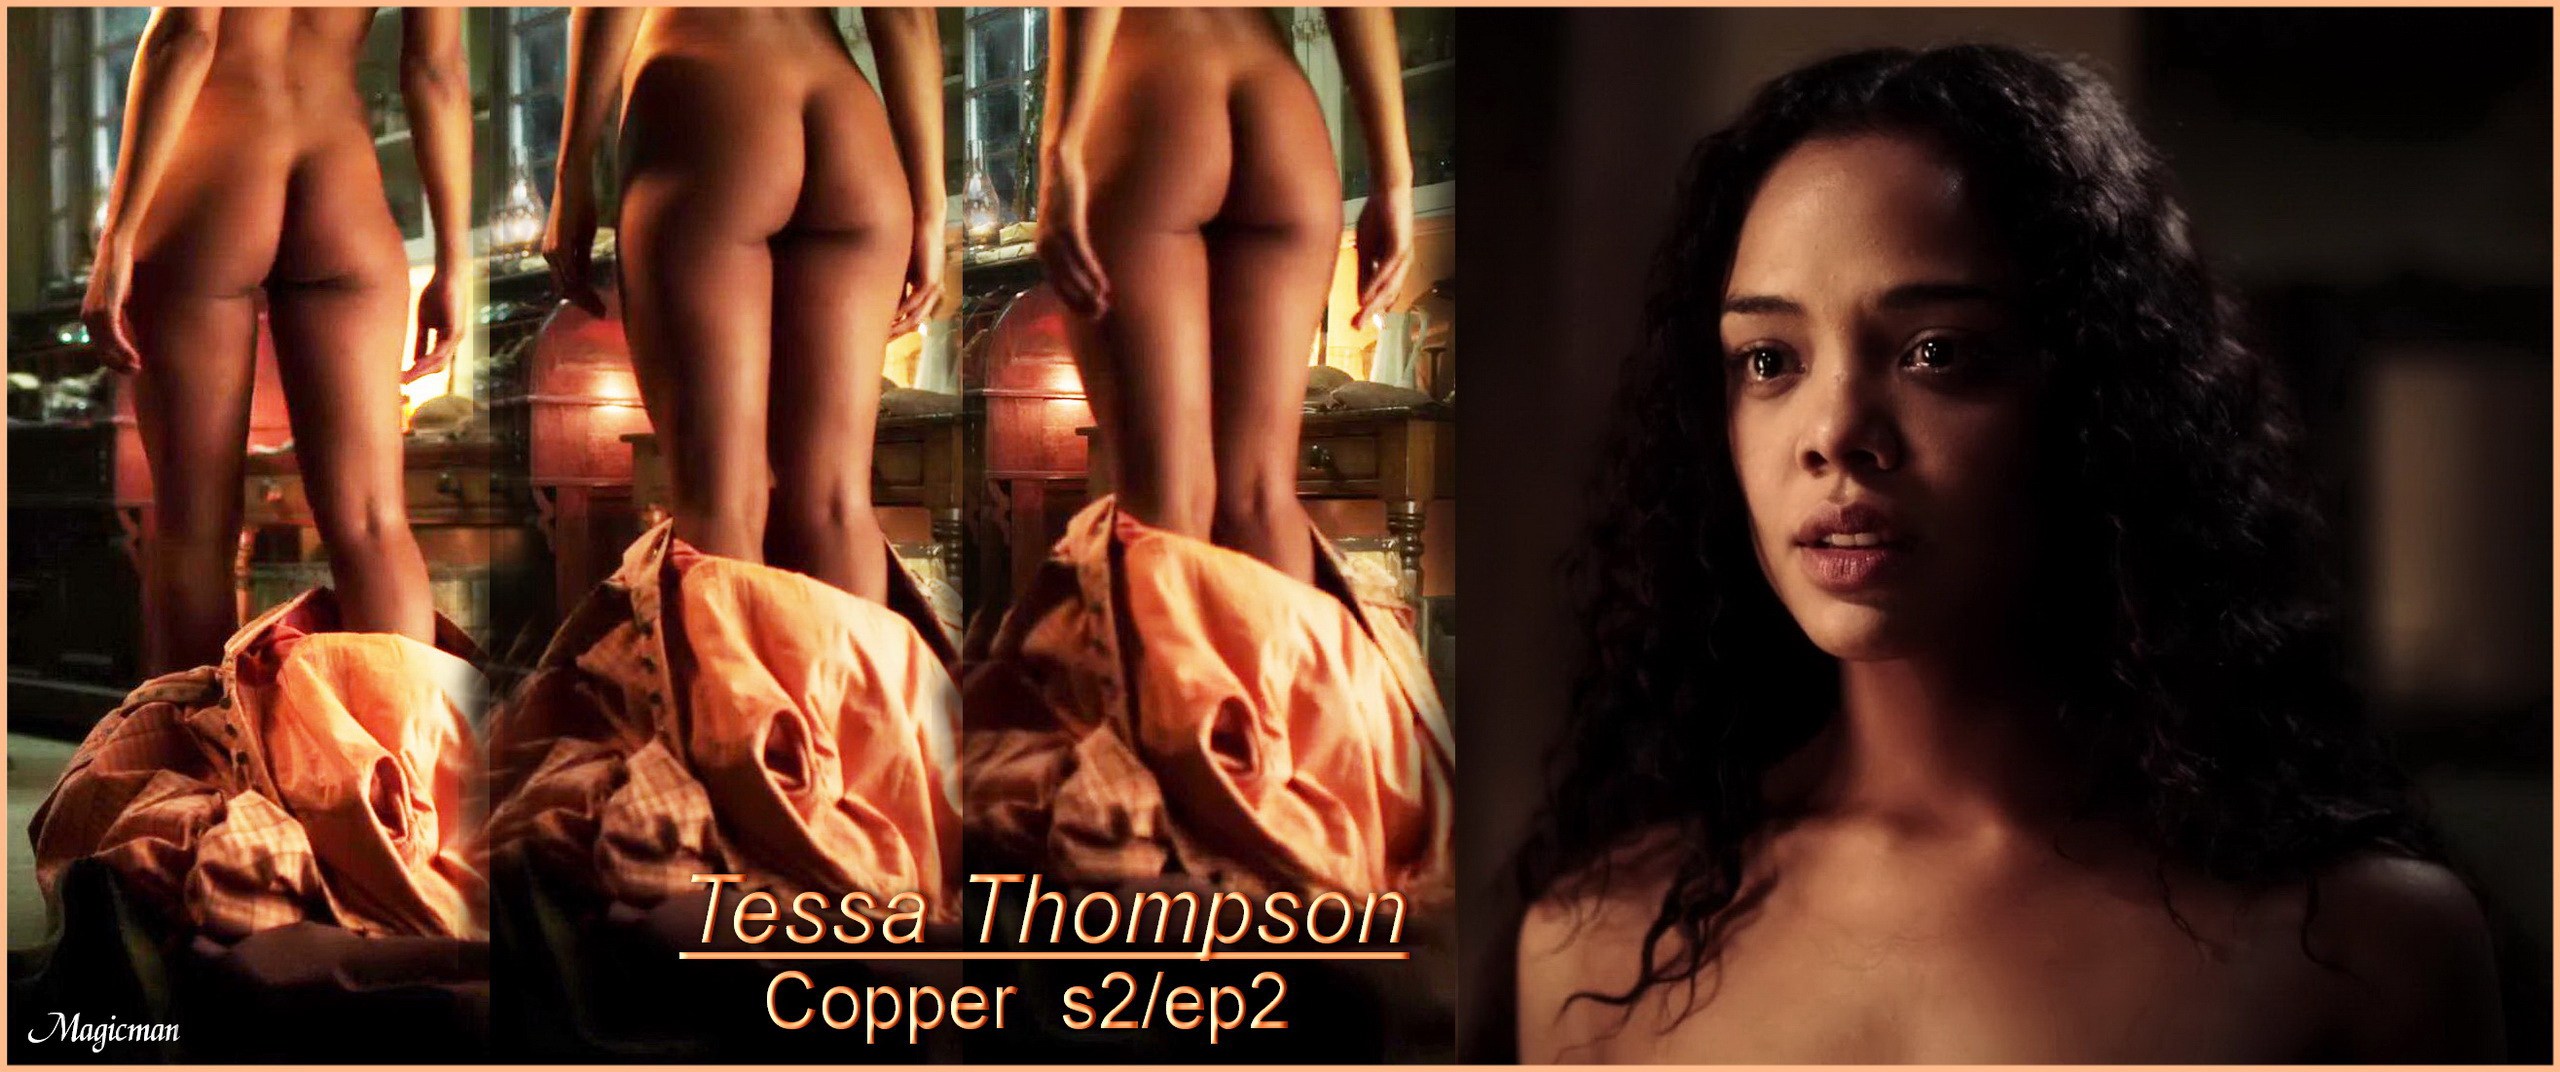 Tessa thompson nude pics